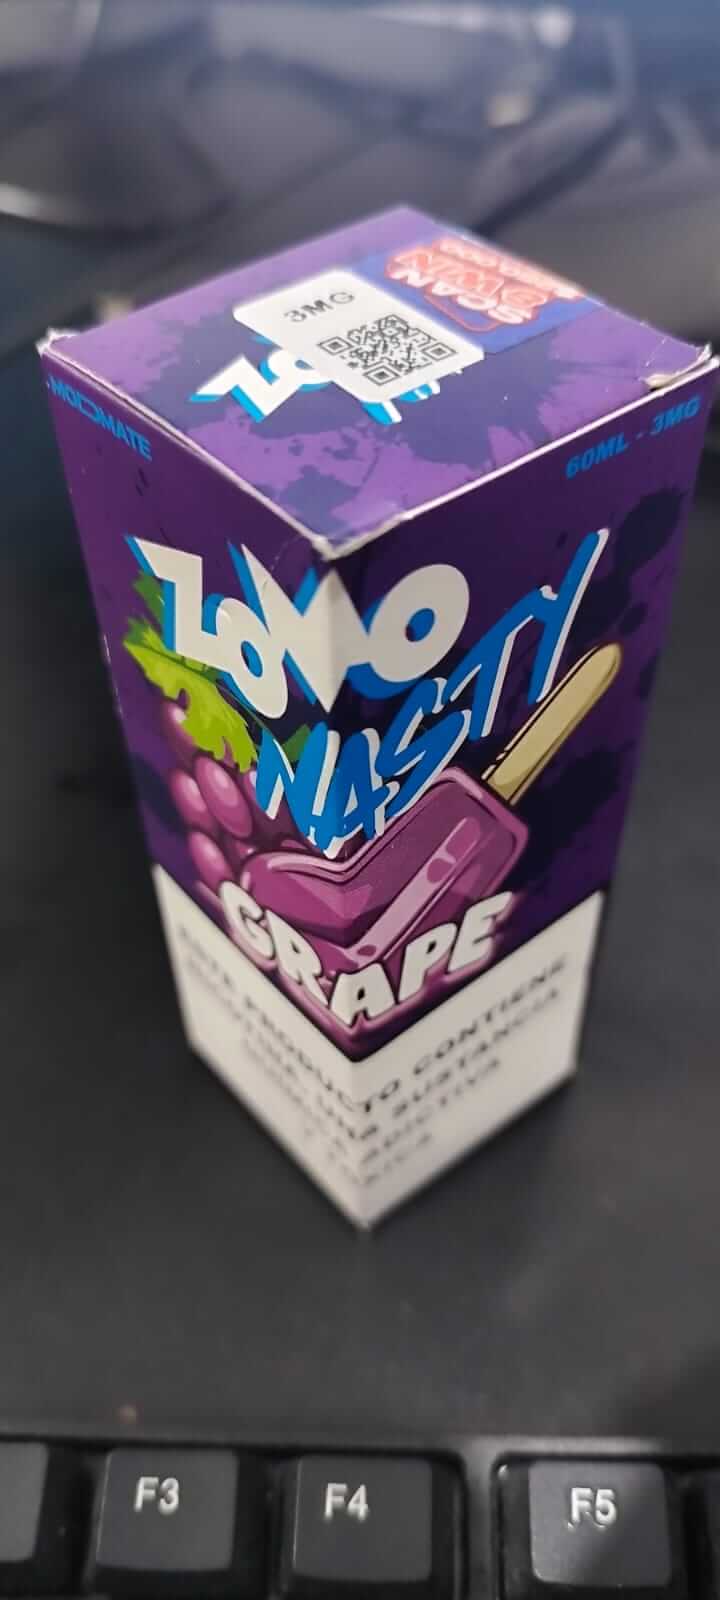 Foto real do produto Zomo Nasty freebase Grape a venda na loja ;ciadovape.com